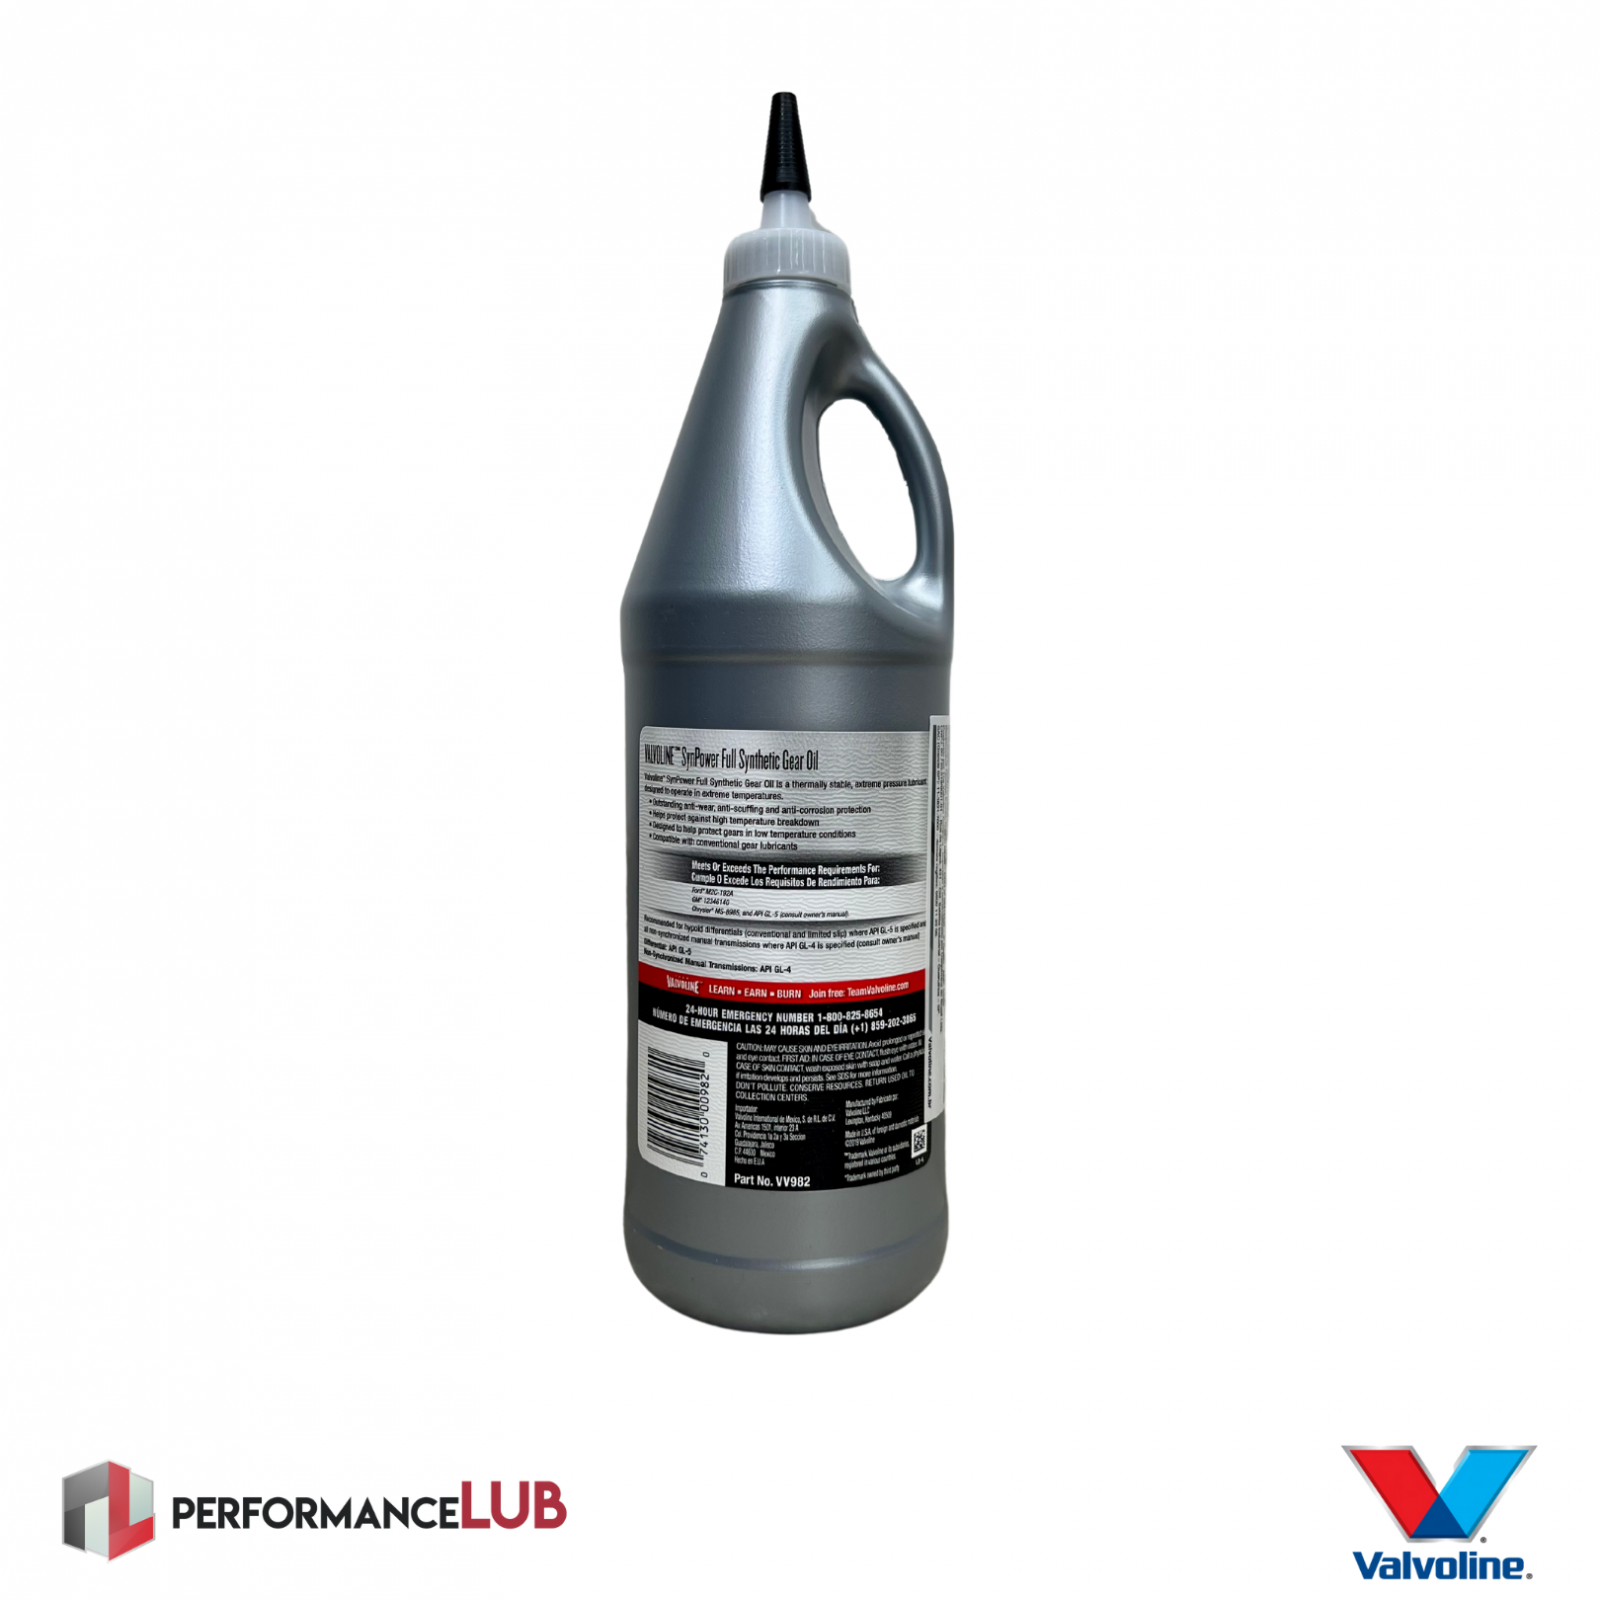 Valvoline SynPower 75W140 LS (API GL-5) - 946 ml - PerformanceLUB Lubrificantes Premium